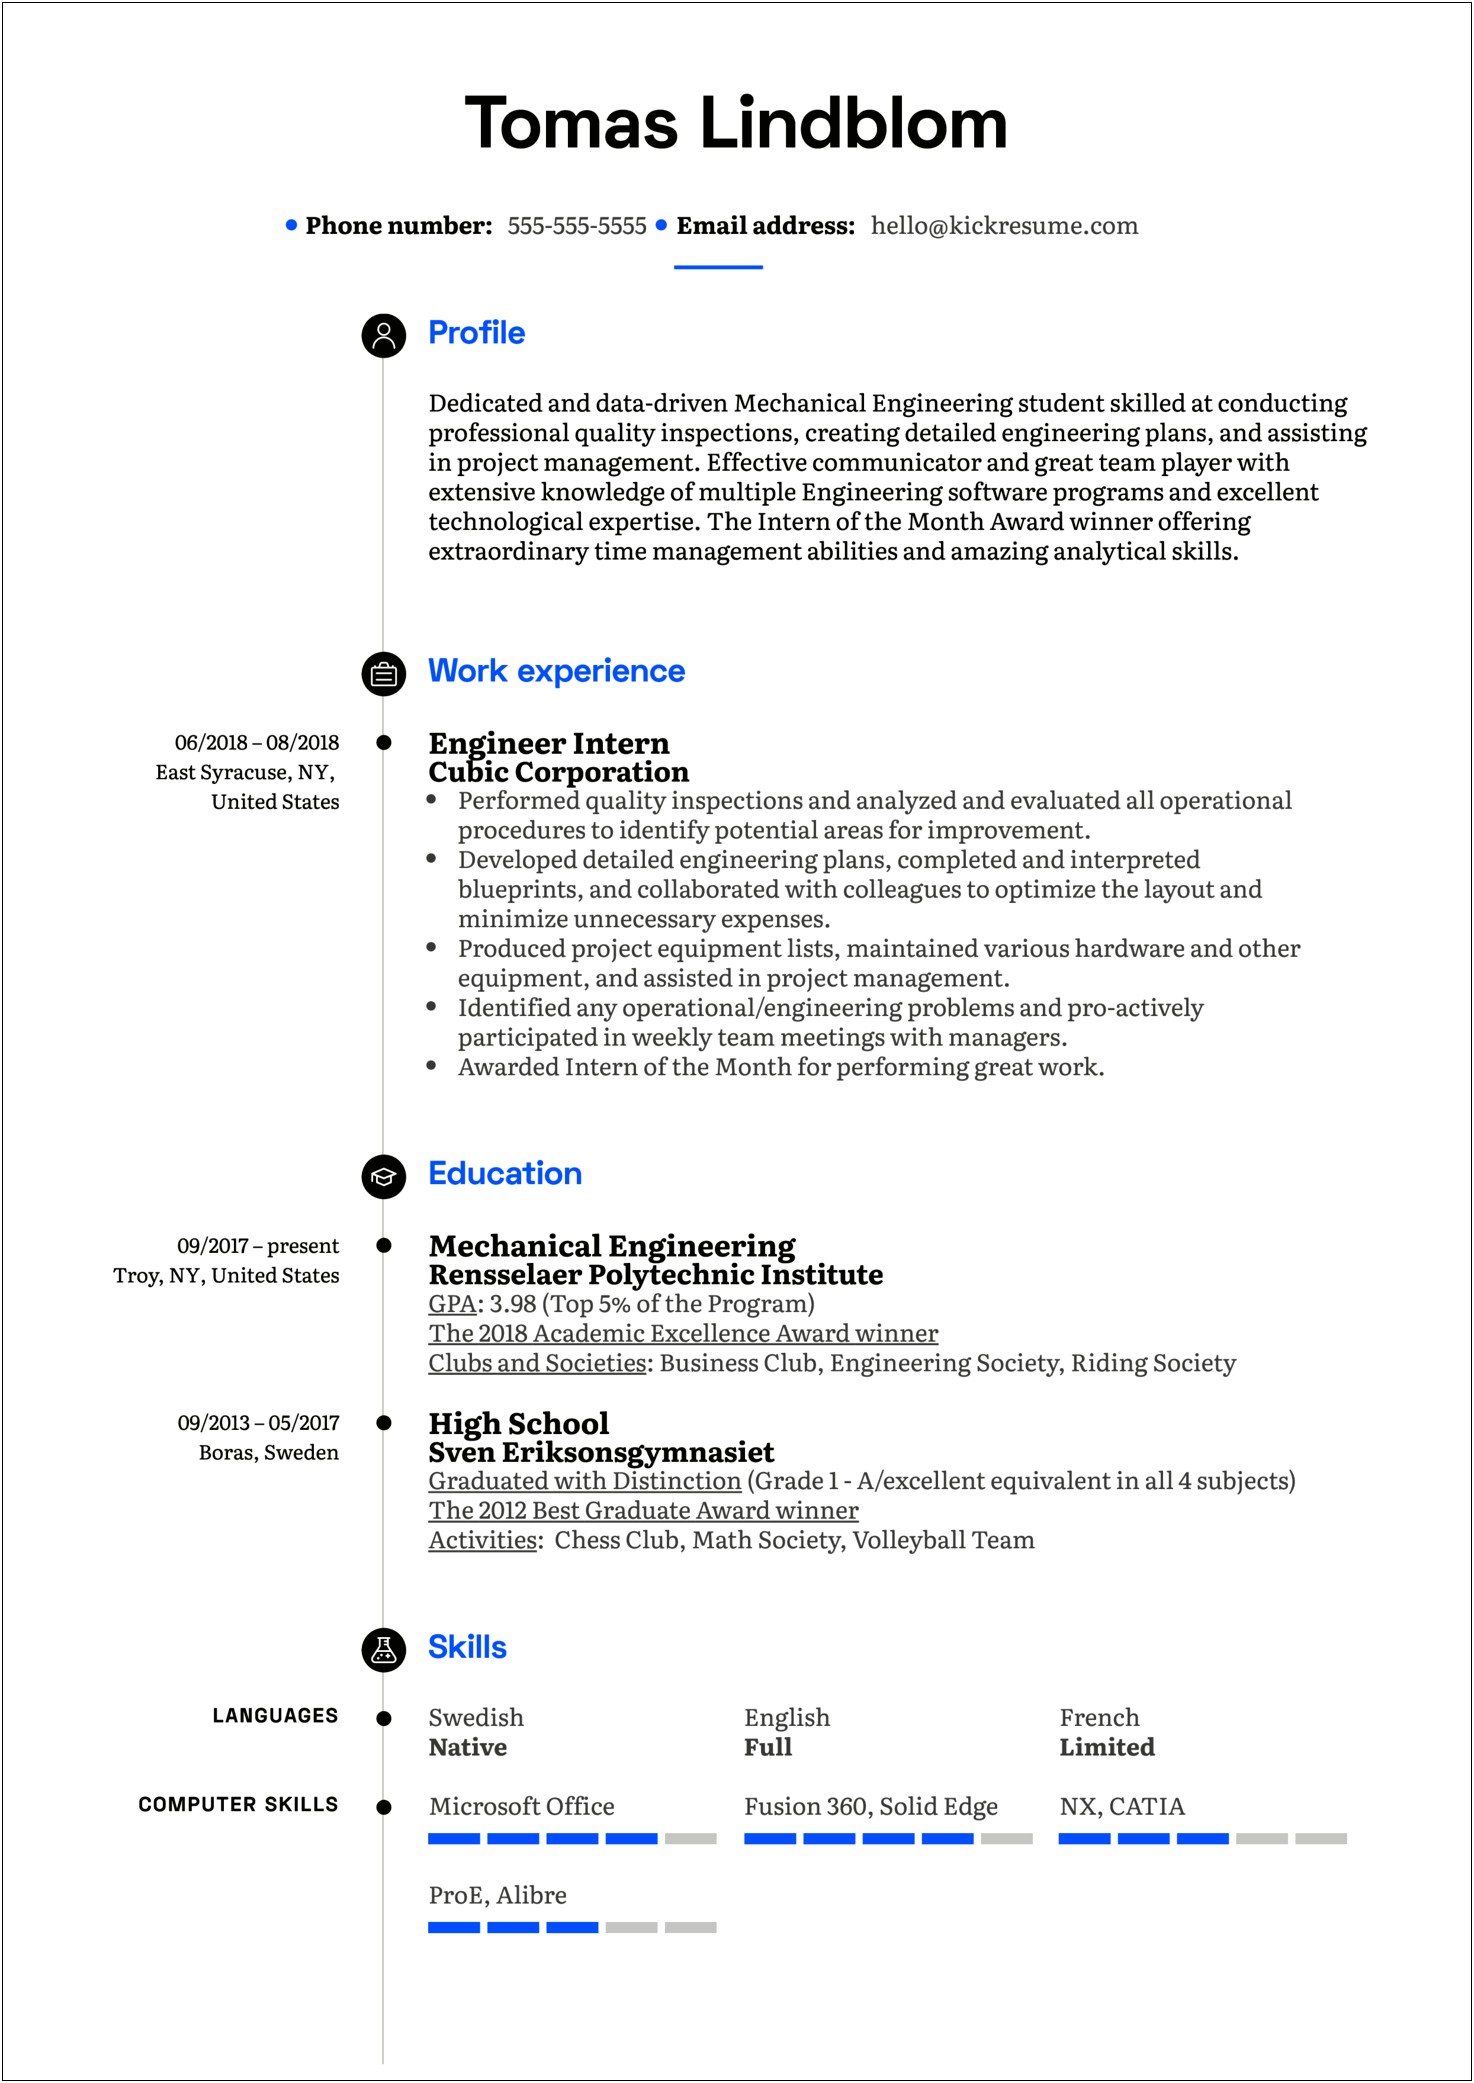 Engineering Intern Job Description For Resume